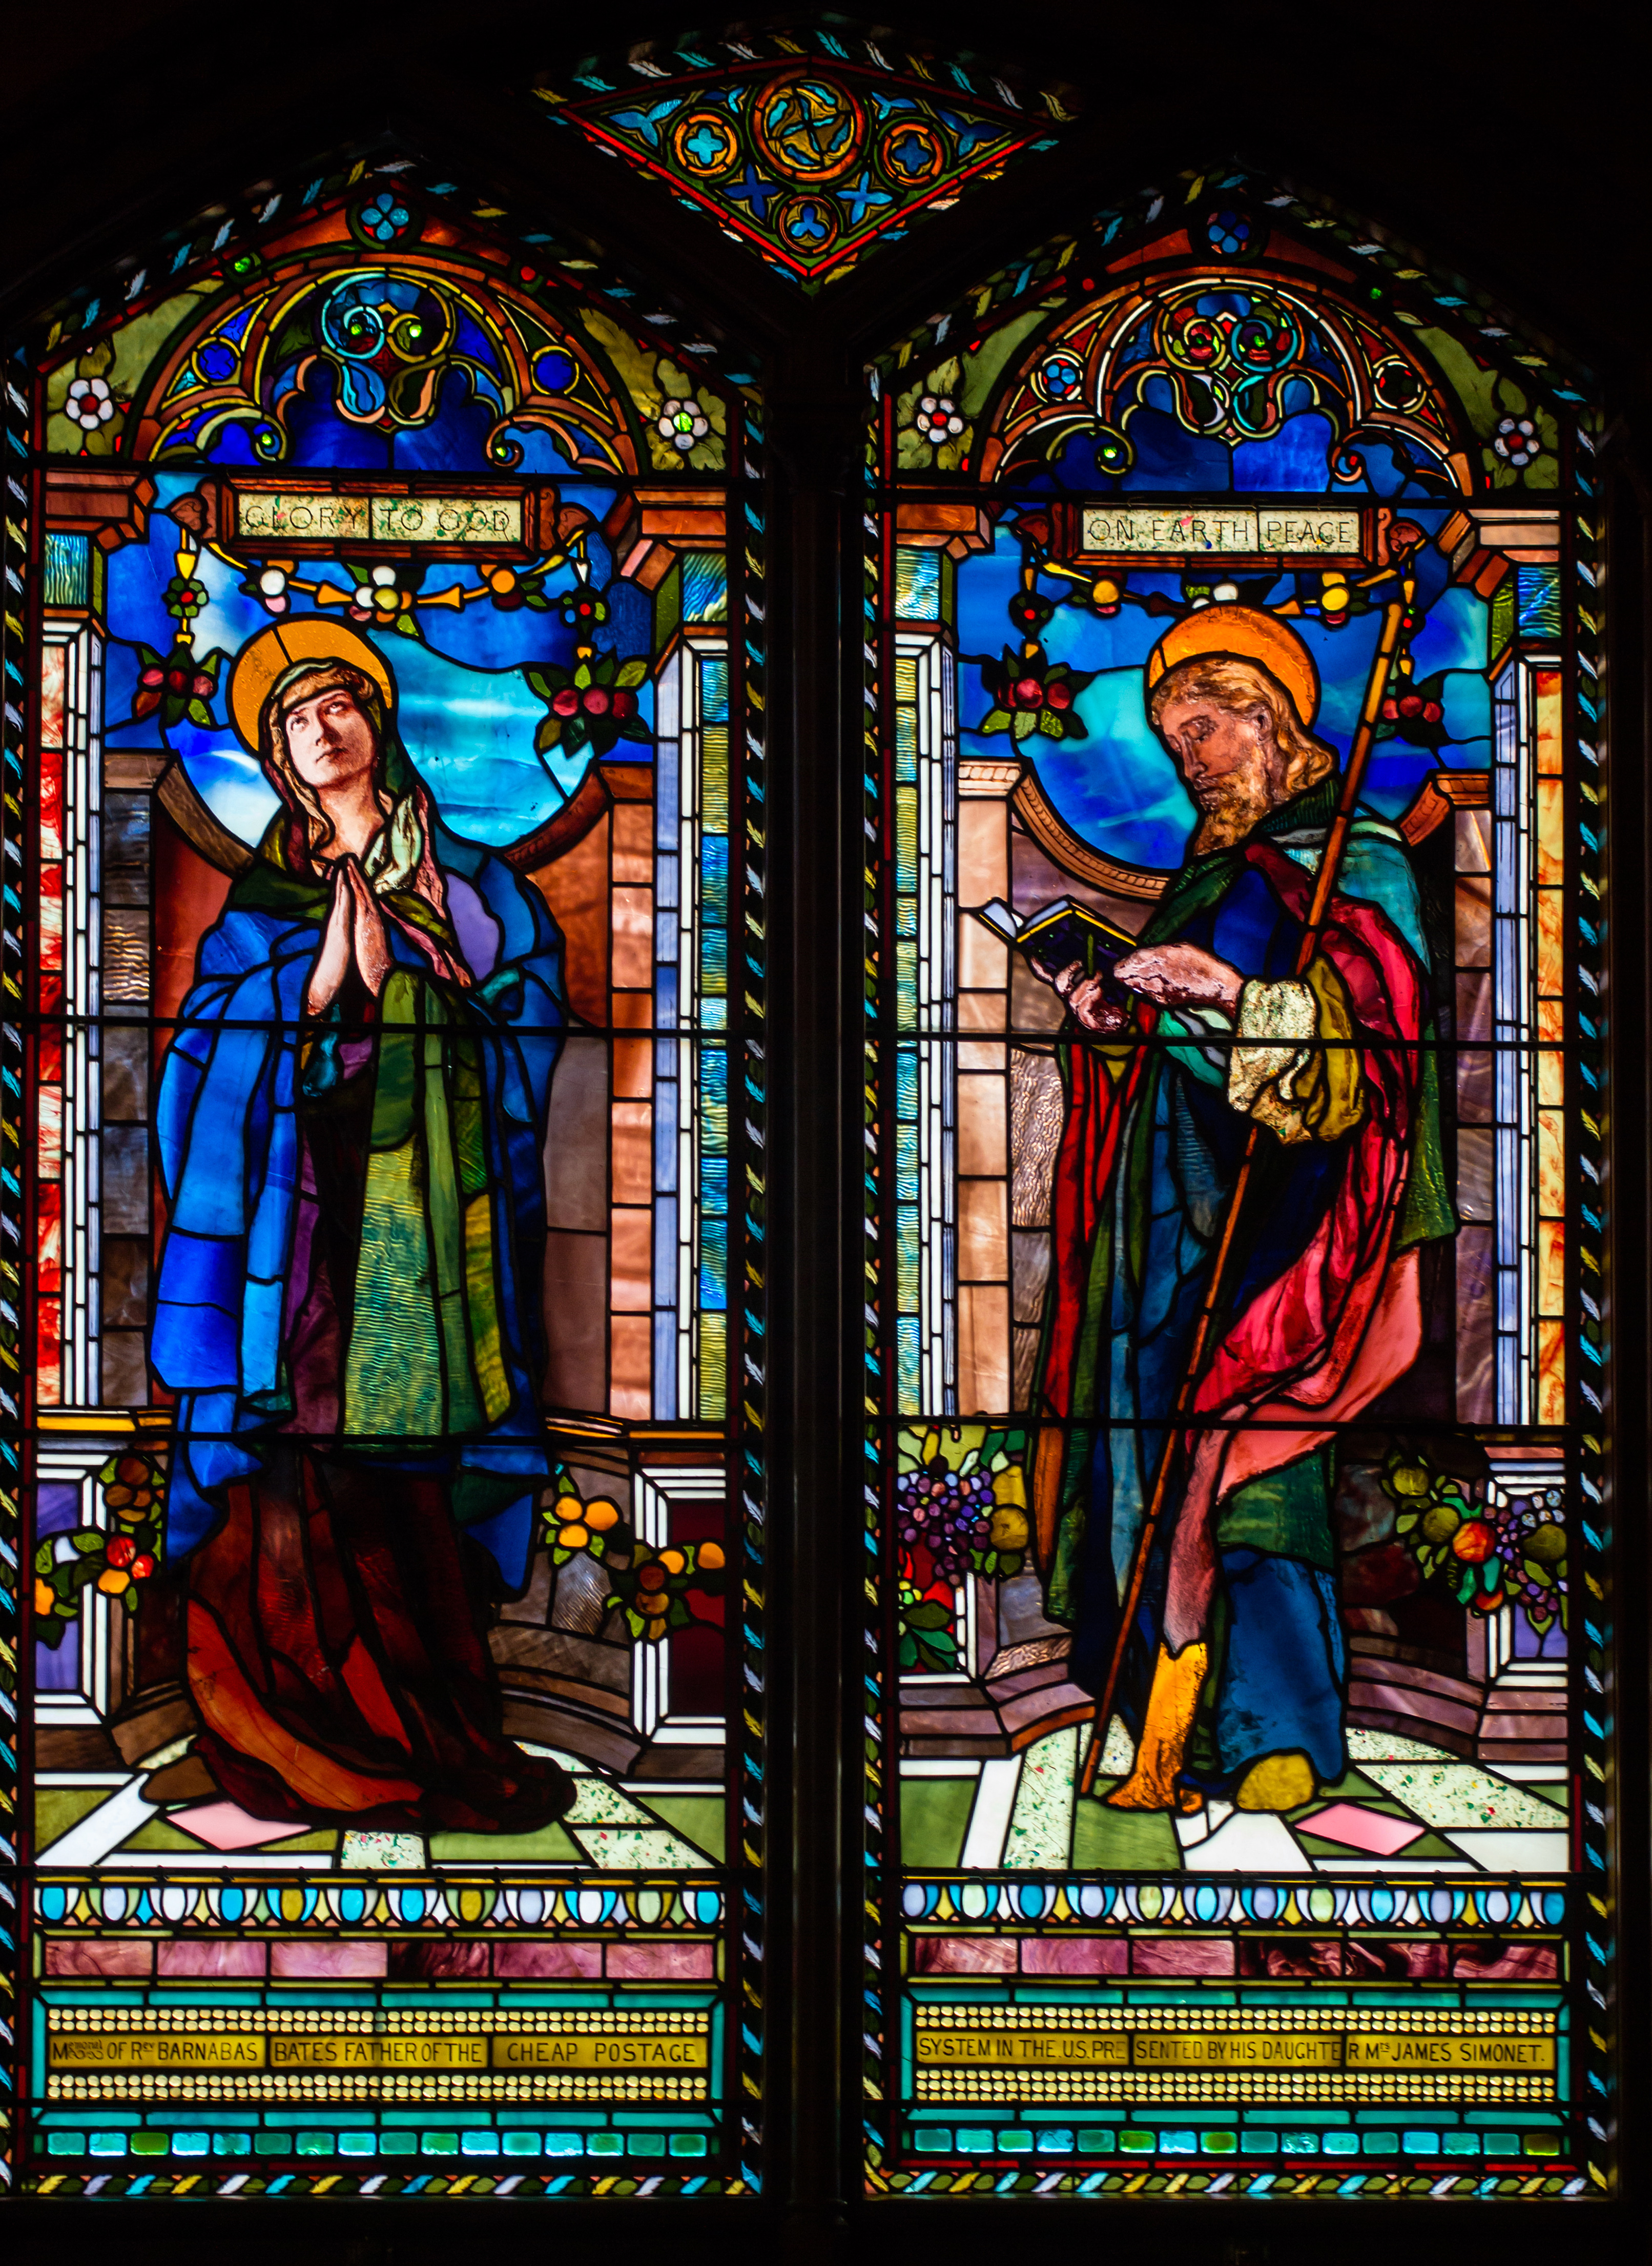 St. Barnabas and the Virgin, Rev. Barnabas Bates Memorial